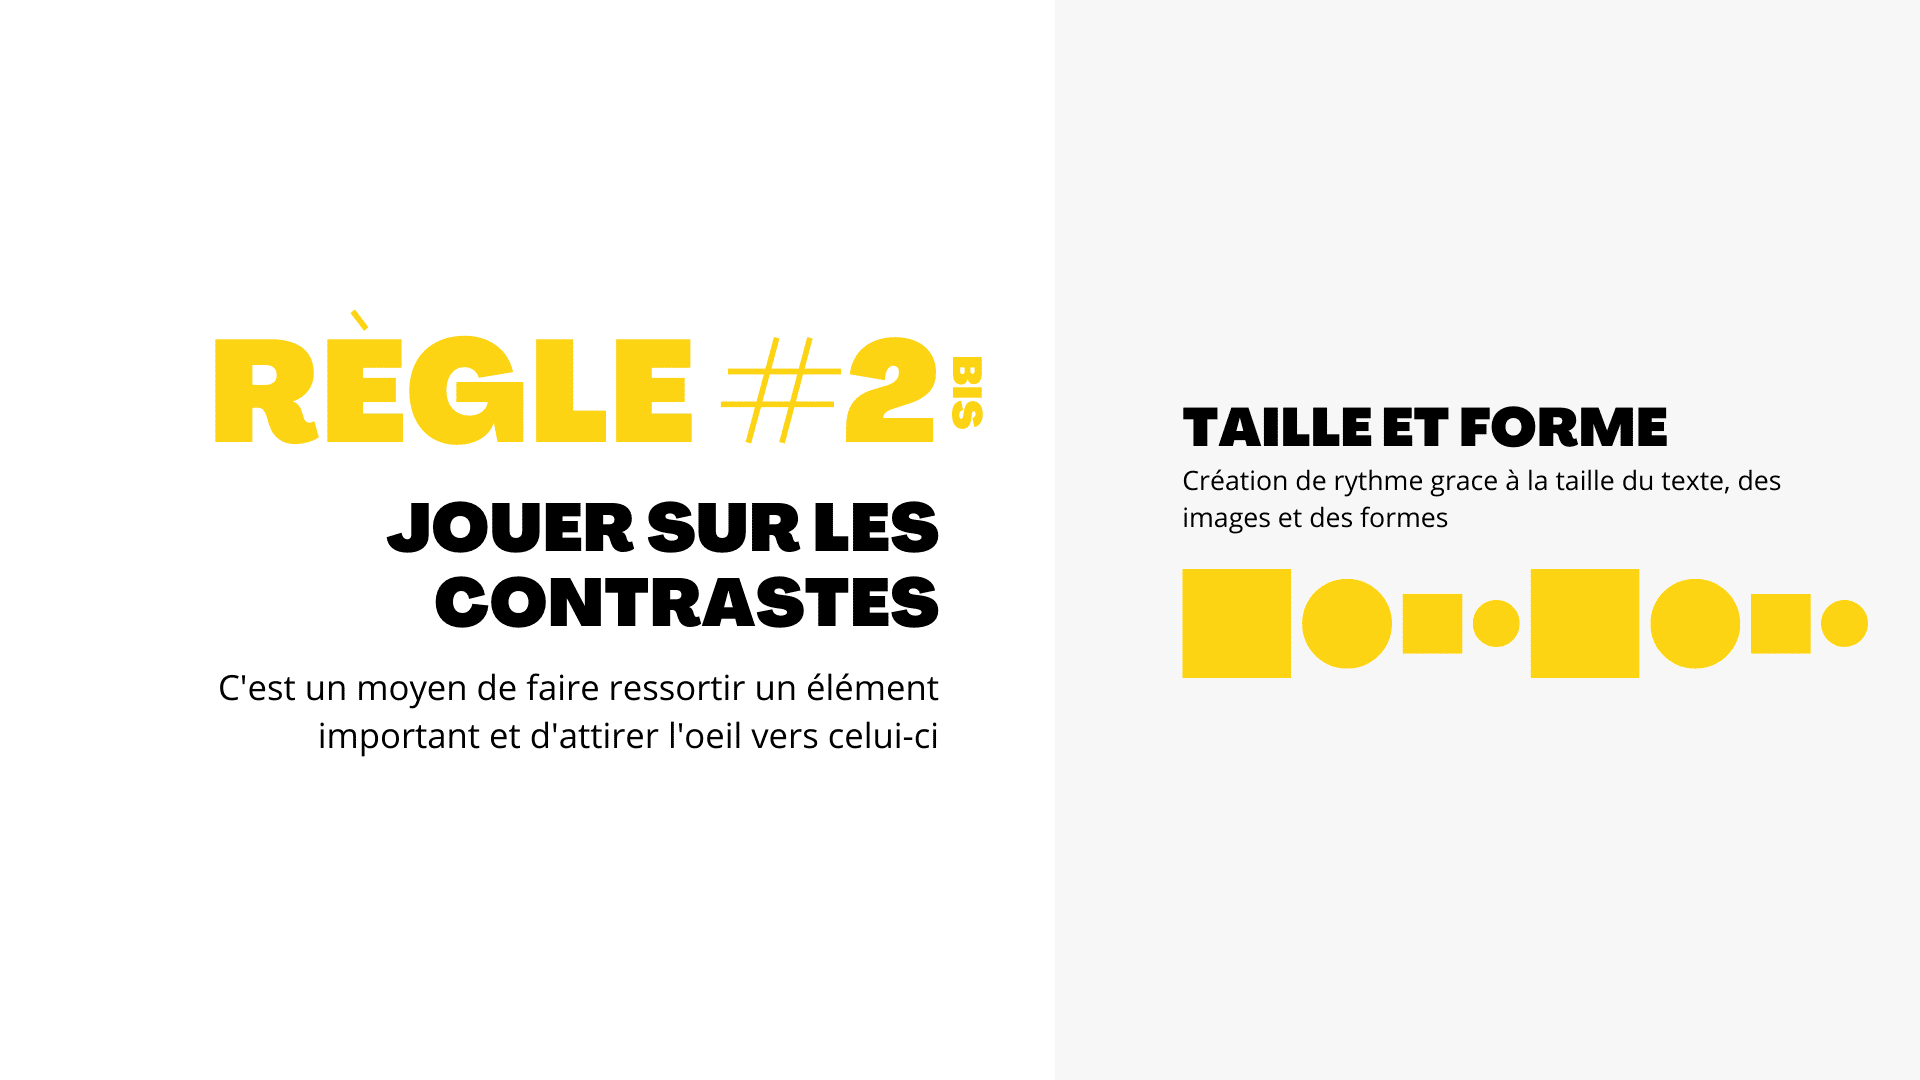 Règle n°2 bis - communication visuelle - contraste taille et forme